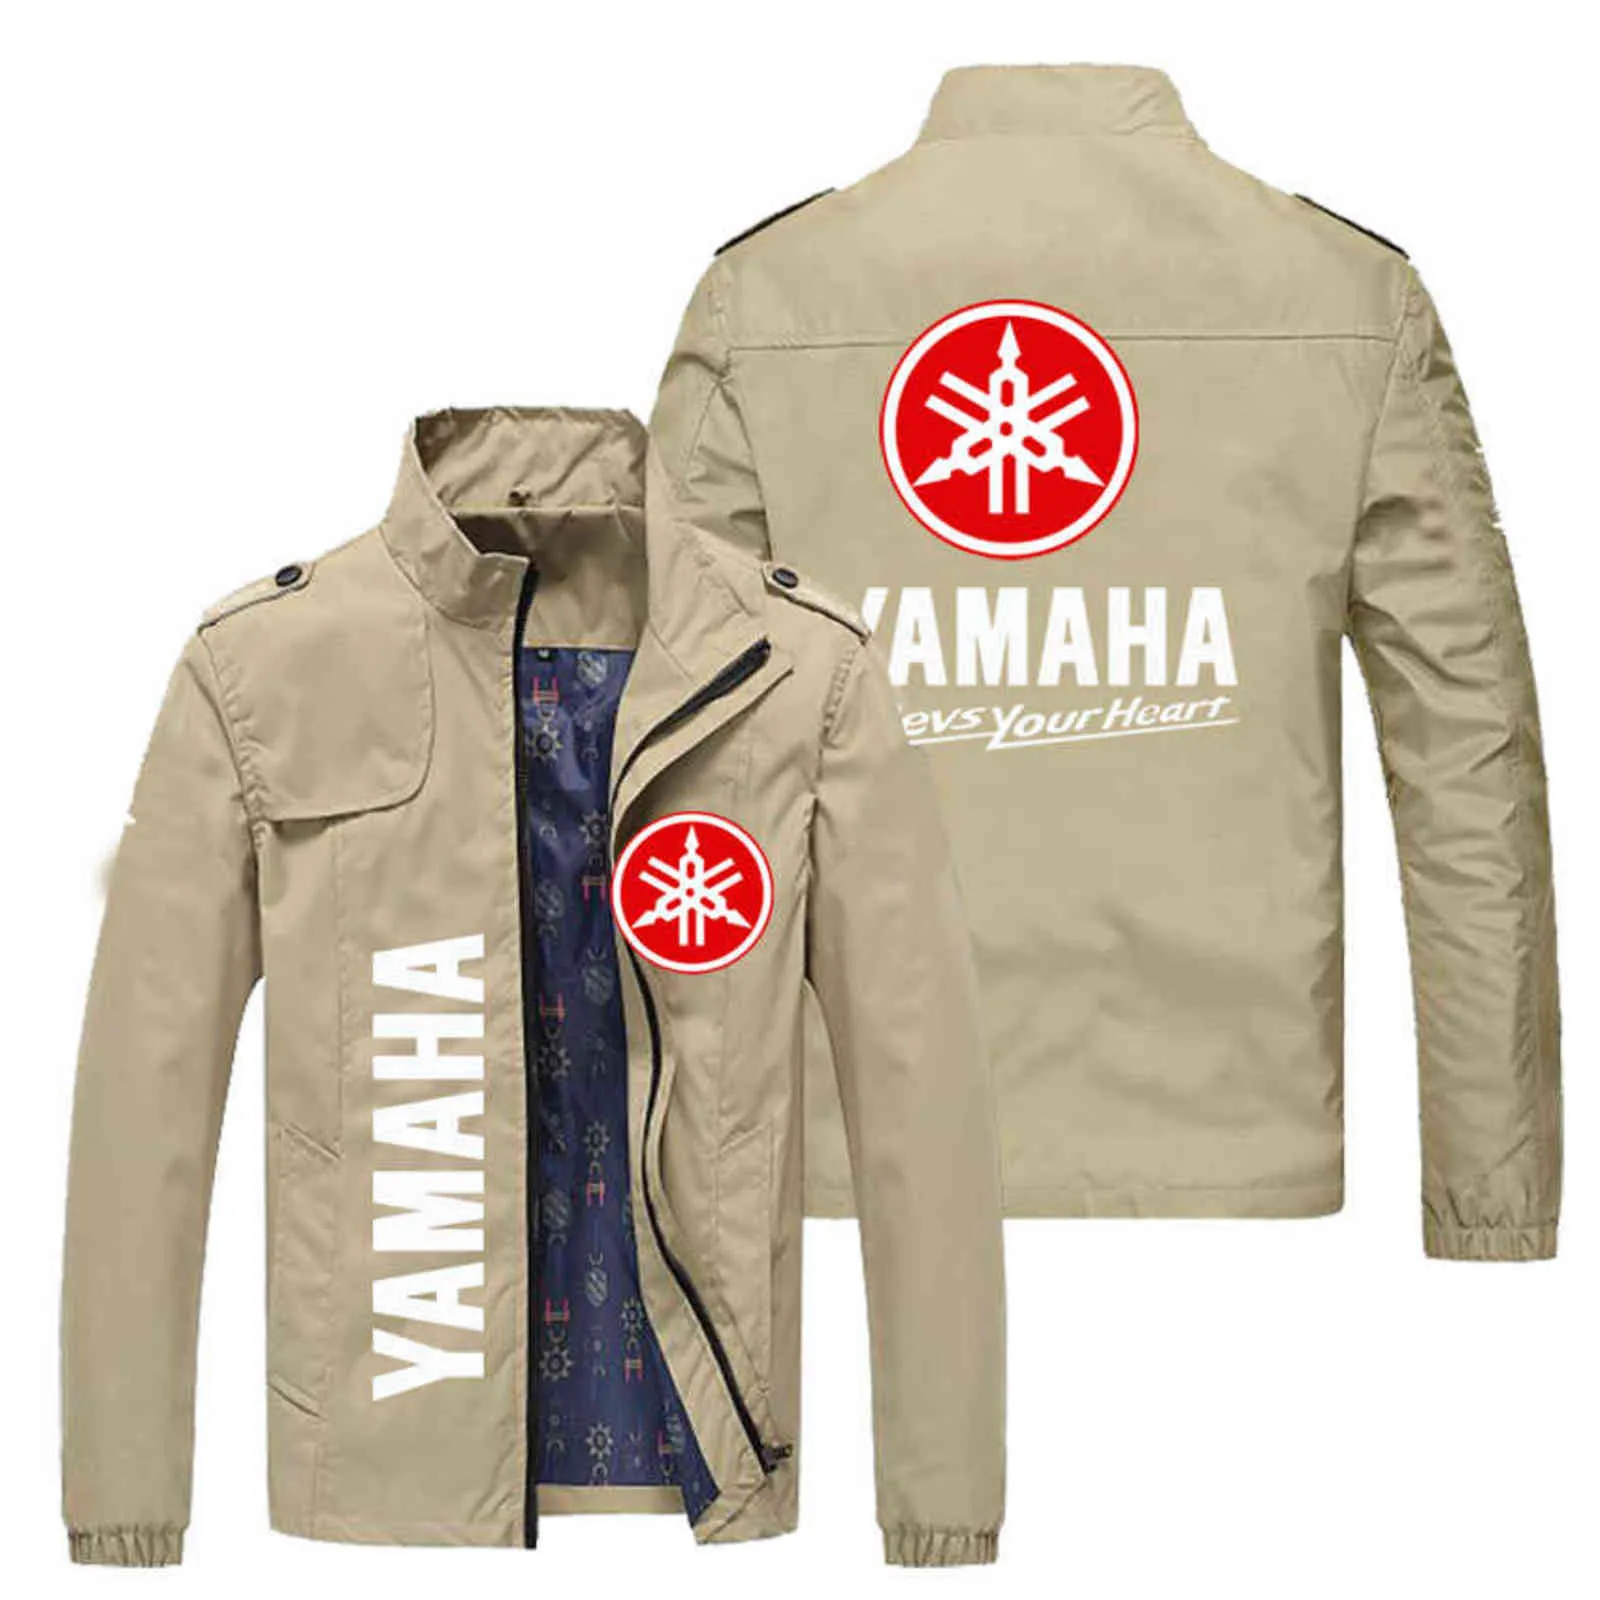 Yamaha Men Jacket Yamaha Print Trend Fashion Jacket Casual Harajuku Windbreaker Outdoor Motorcycle Bike Jacket Men Coats X1106